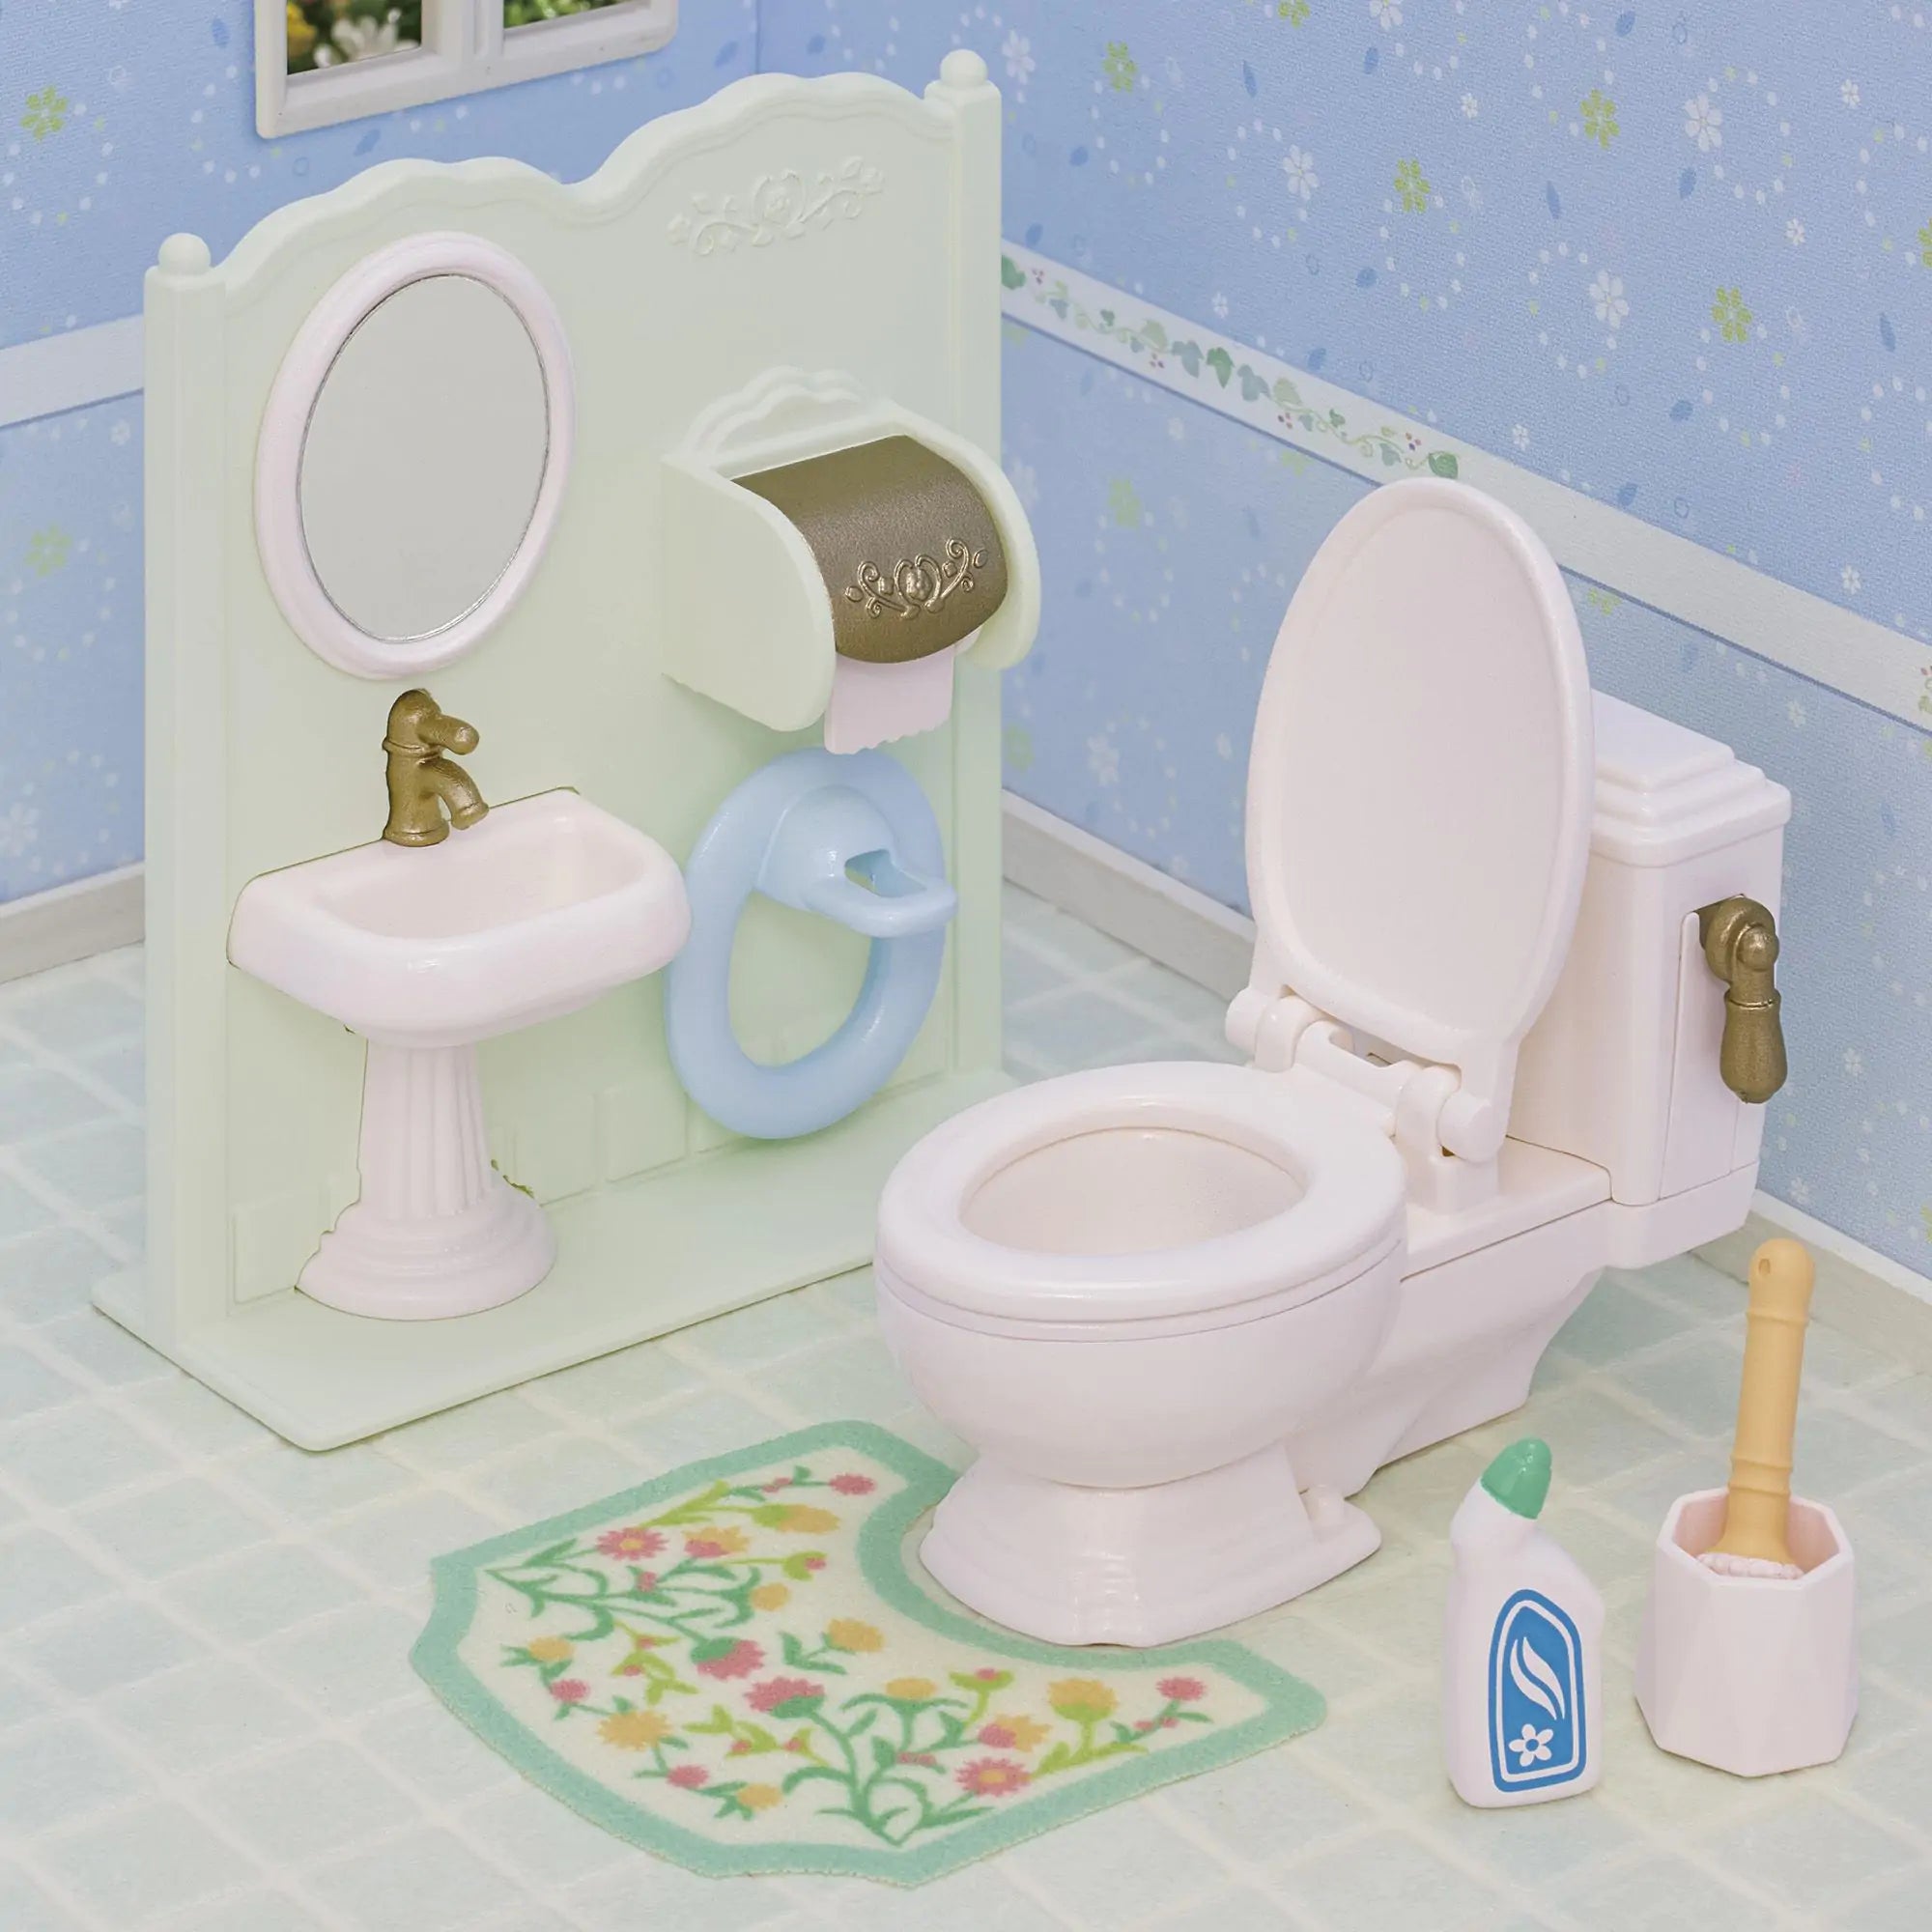 Sylvanian Families - Toilet Set - Toybox Tales